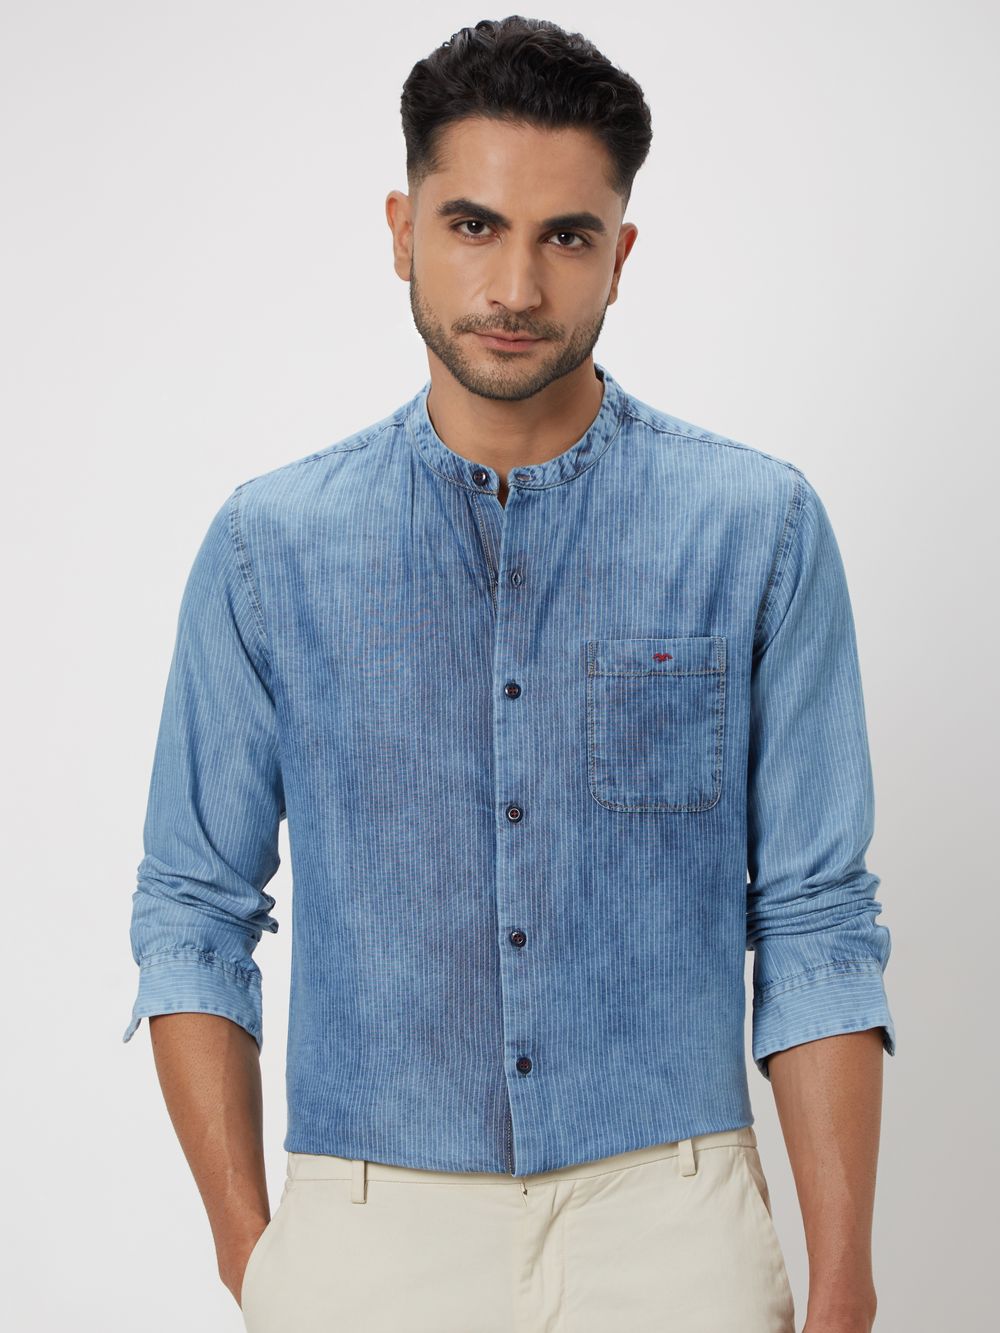 Indigo Blue Pin Stripe Shirt